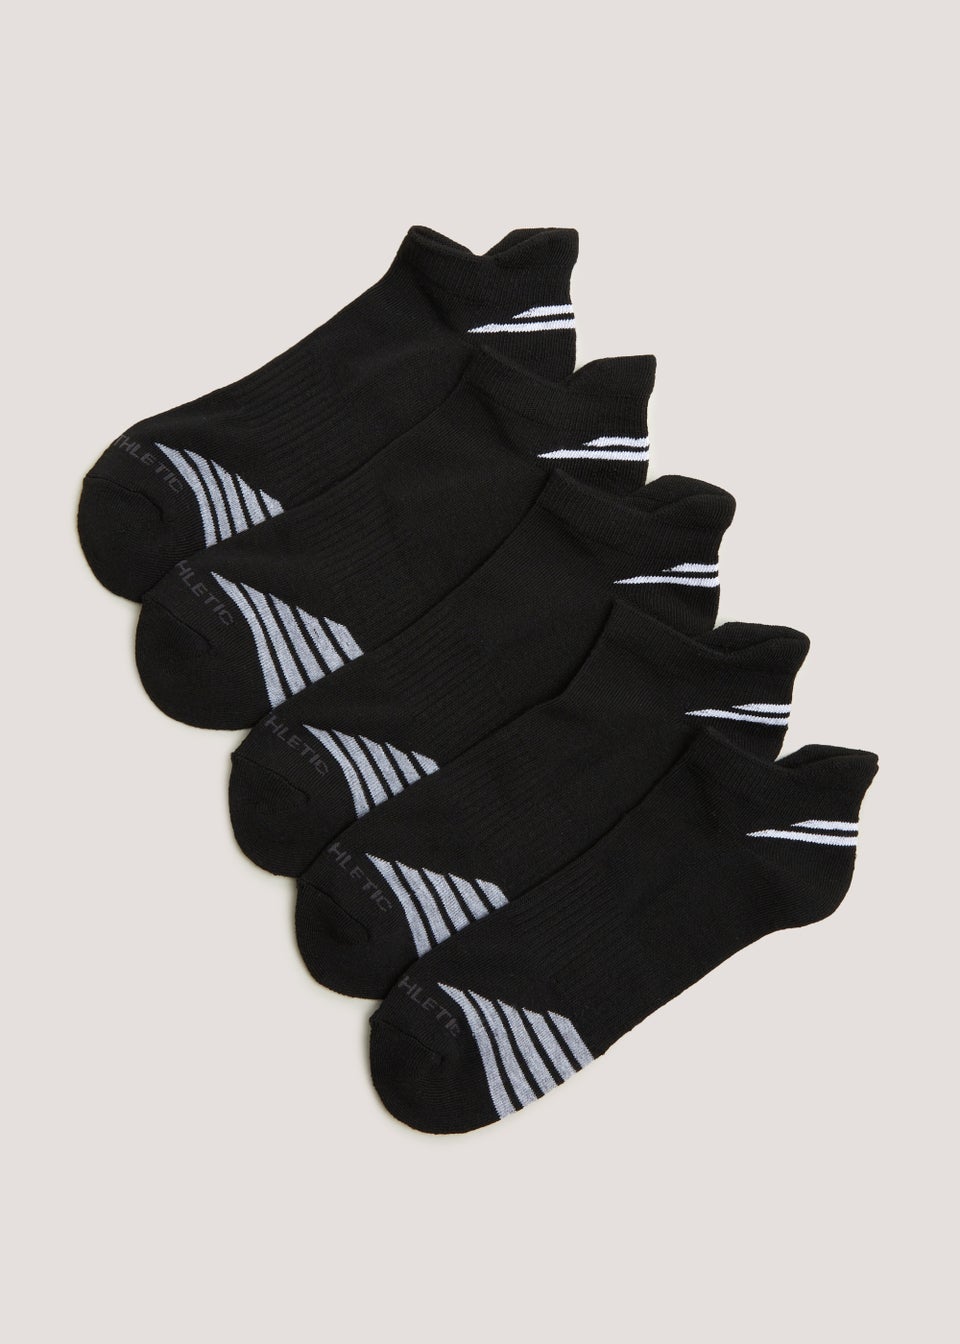 US Athletic 5 Pack Black Trainer Socks